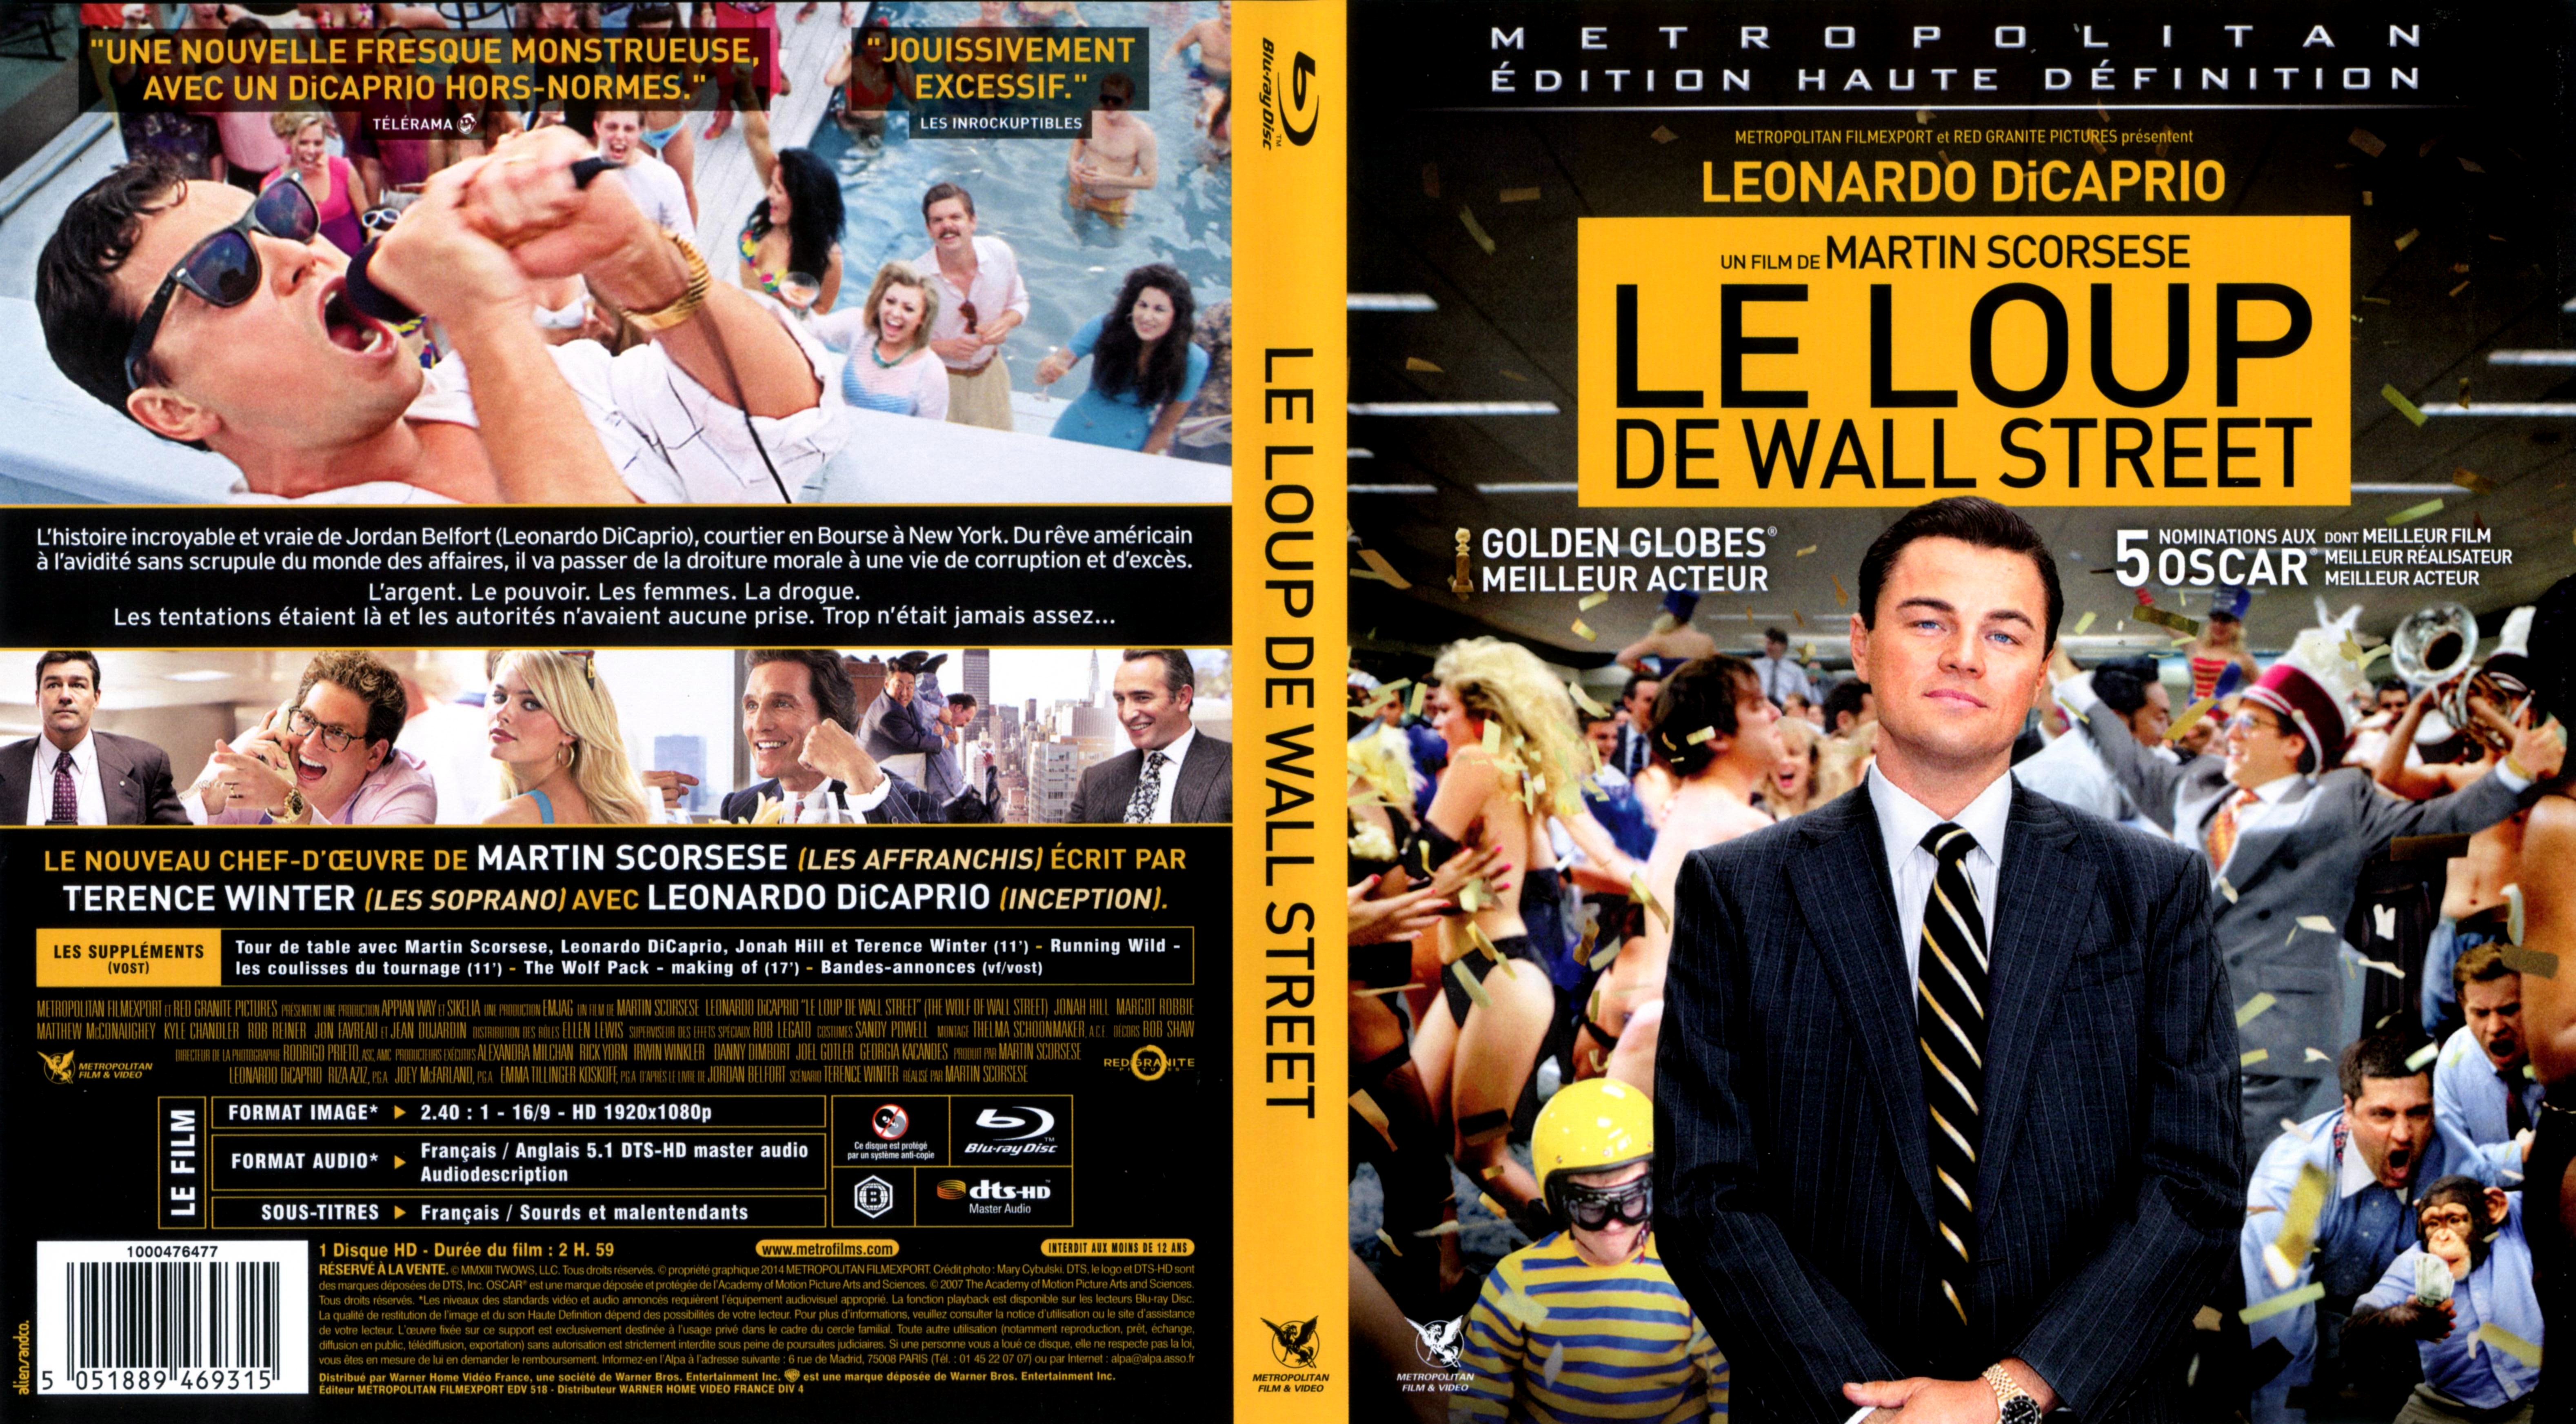 Jaquette DVD Le loup de Wall Sreet (BLU-RAY) v2